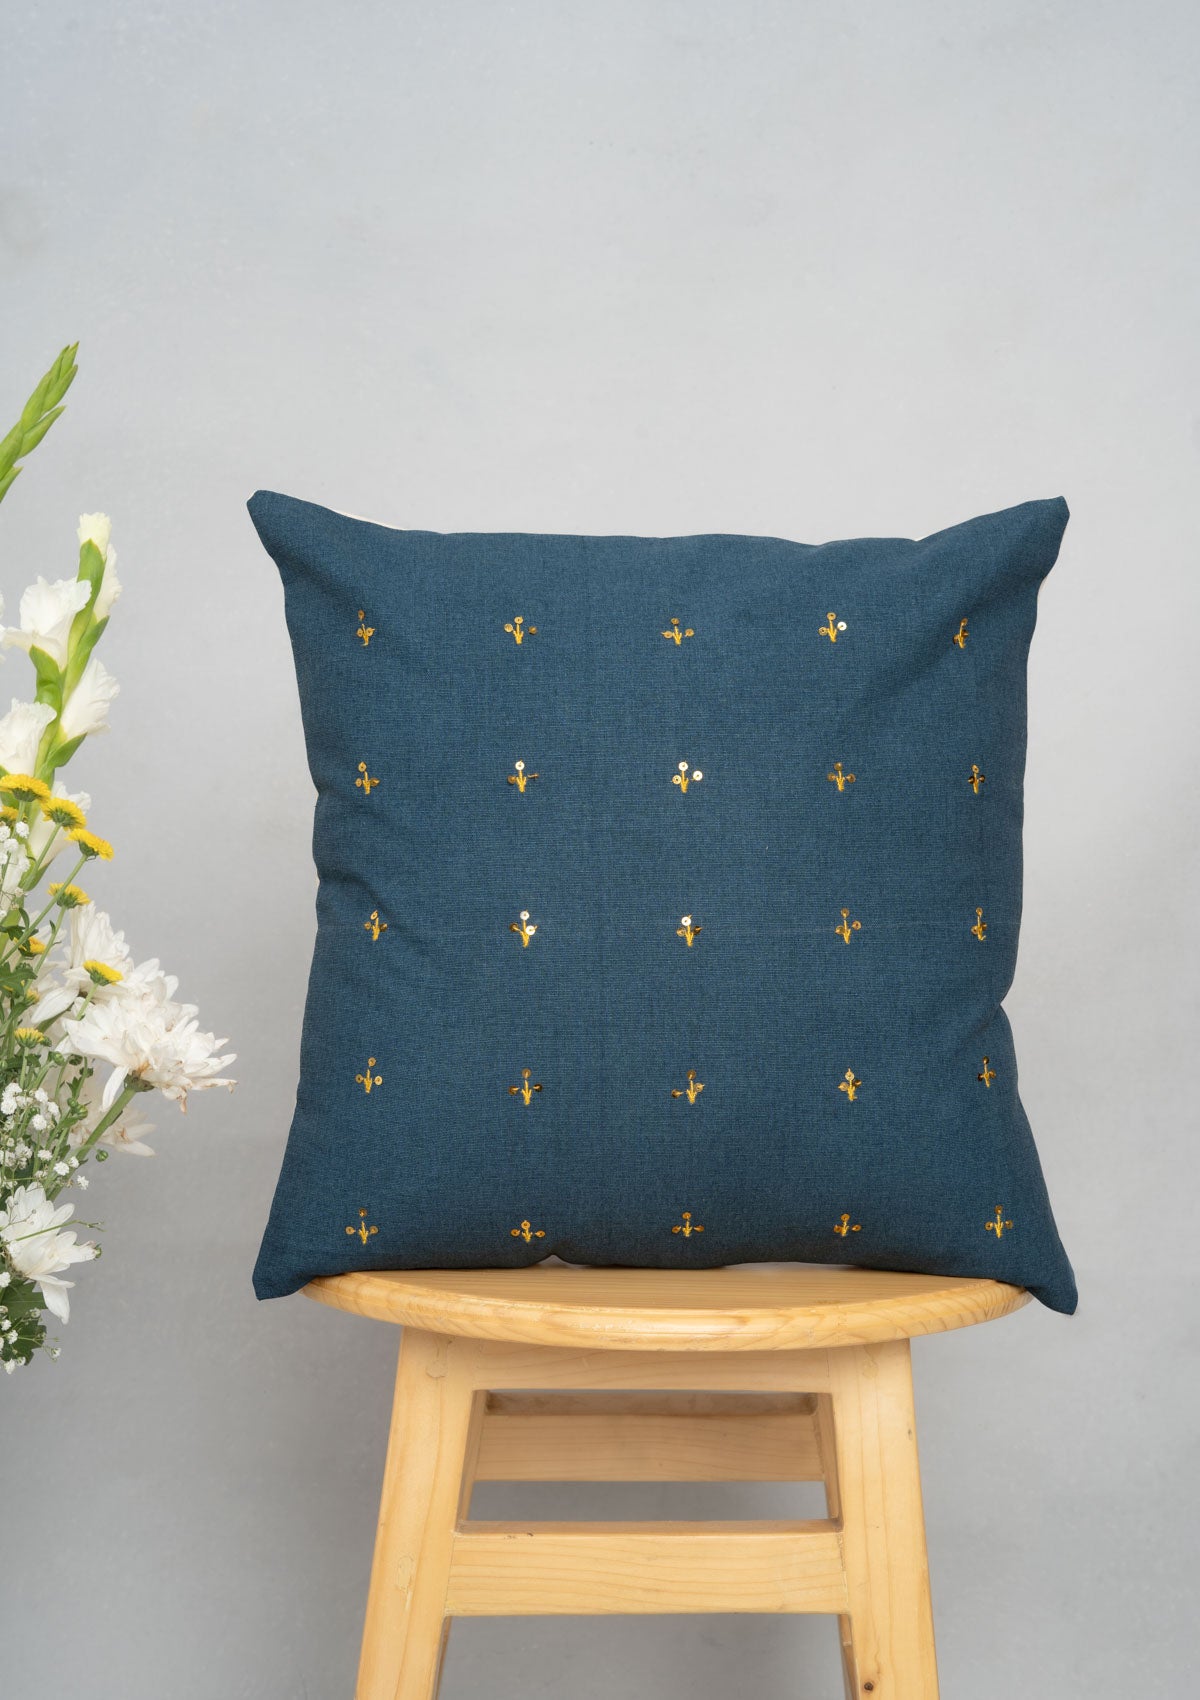 Kohinoor Sequined ethnic cotton cushion cover for sofa - Indigo